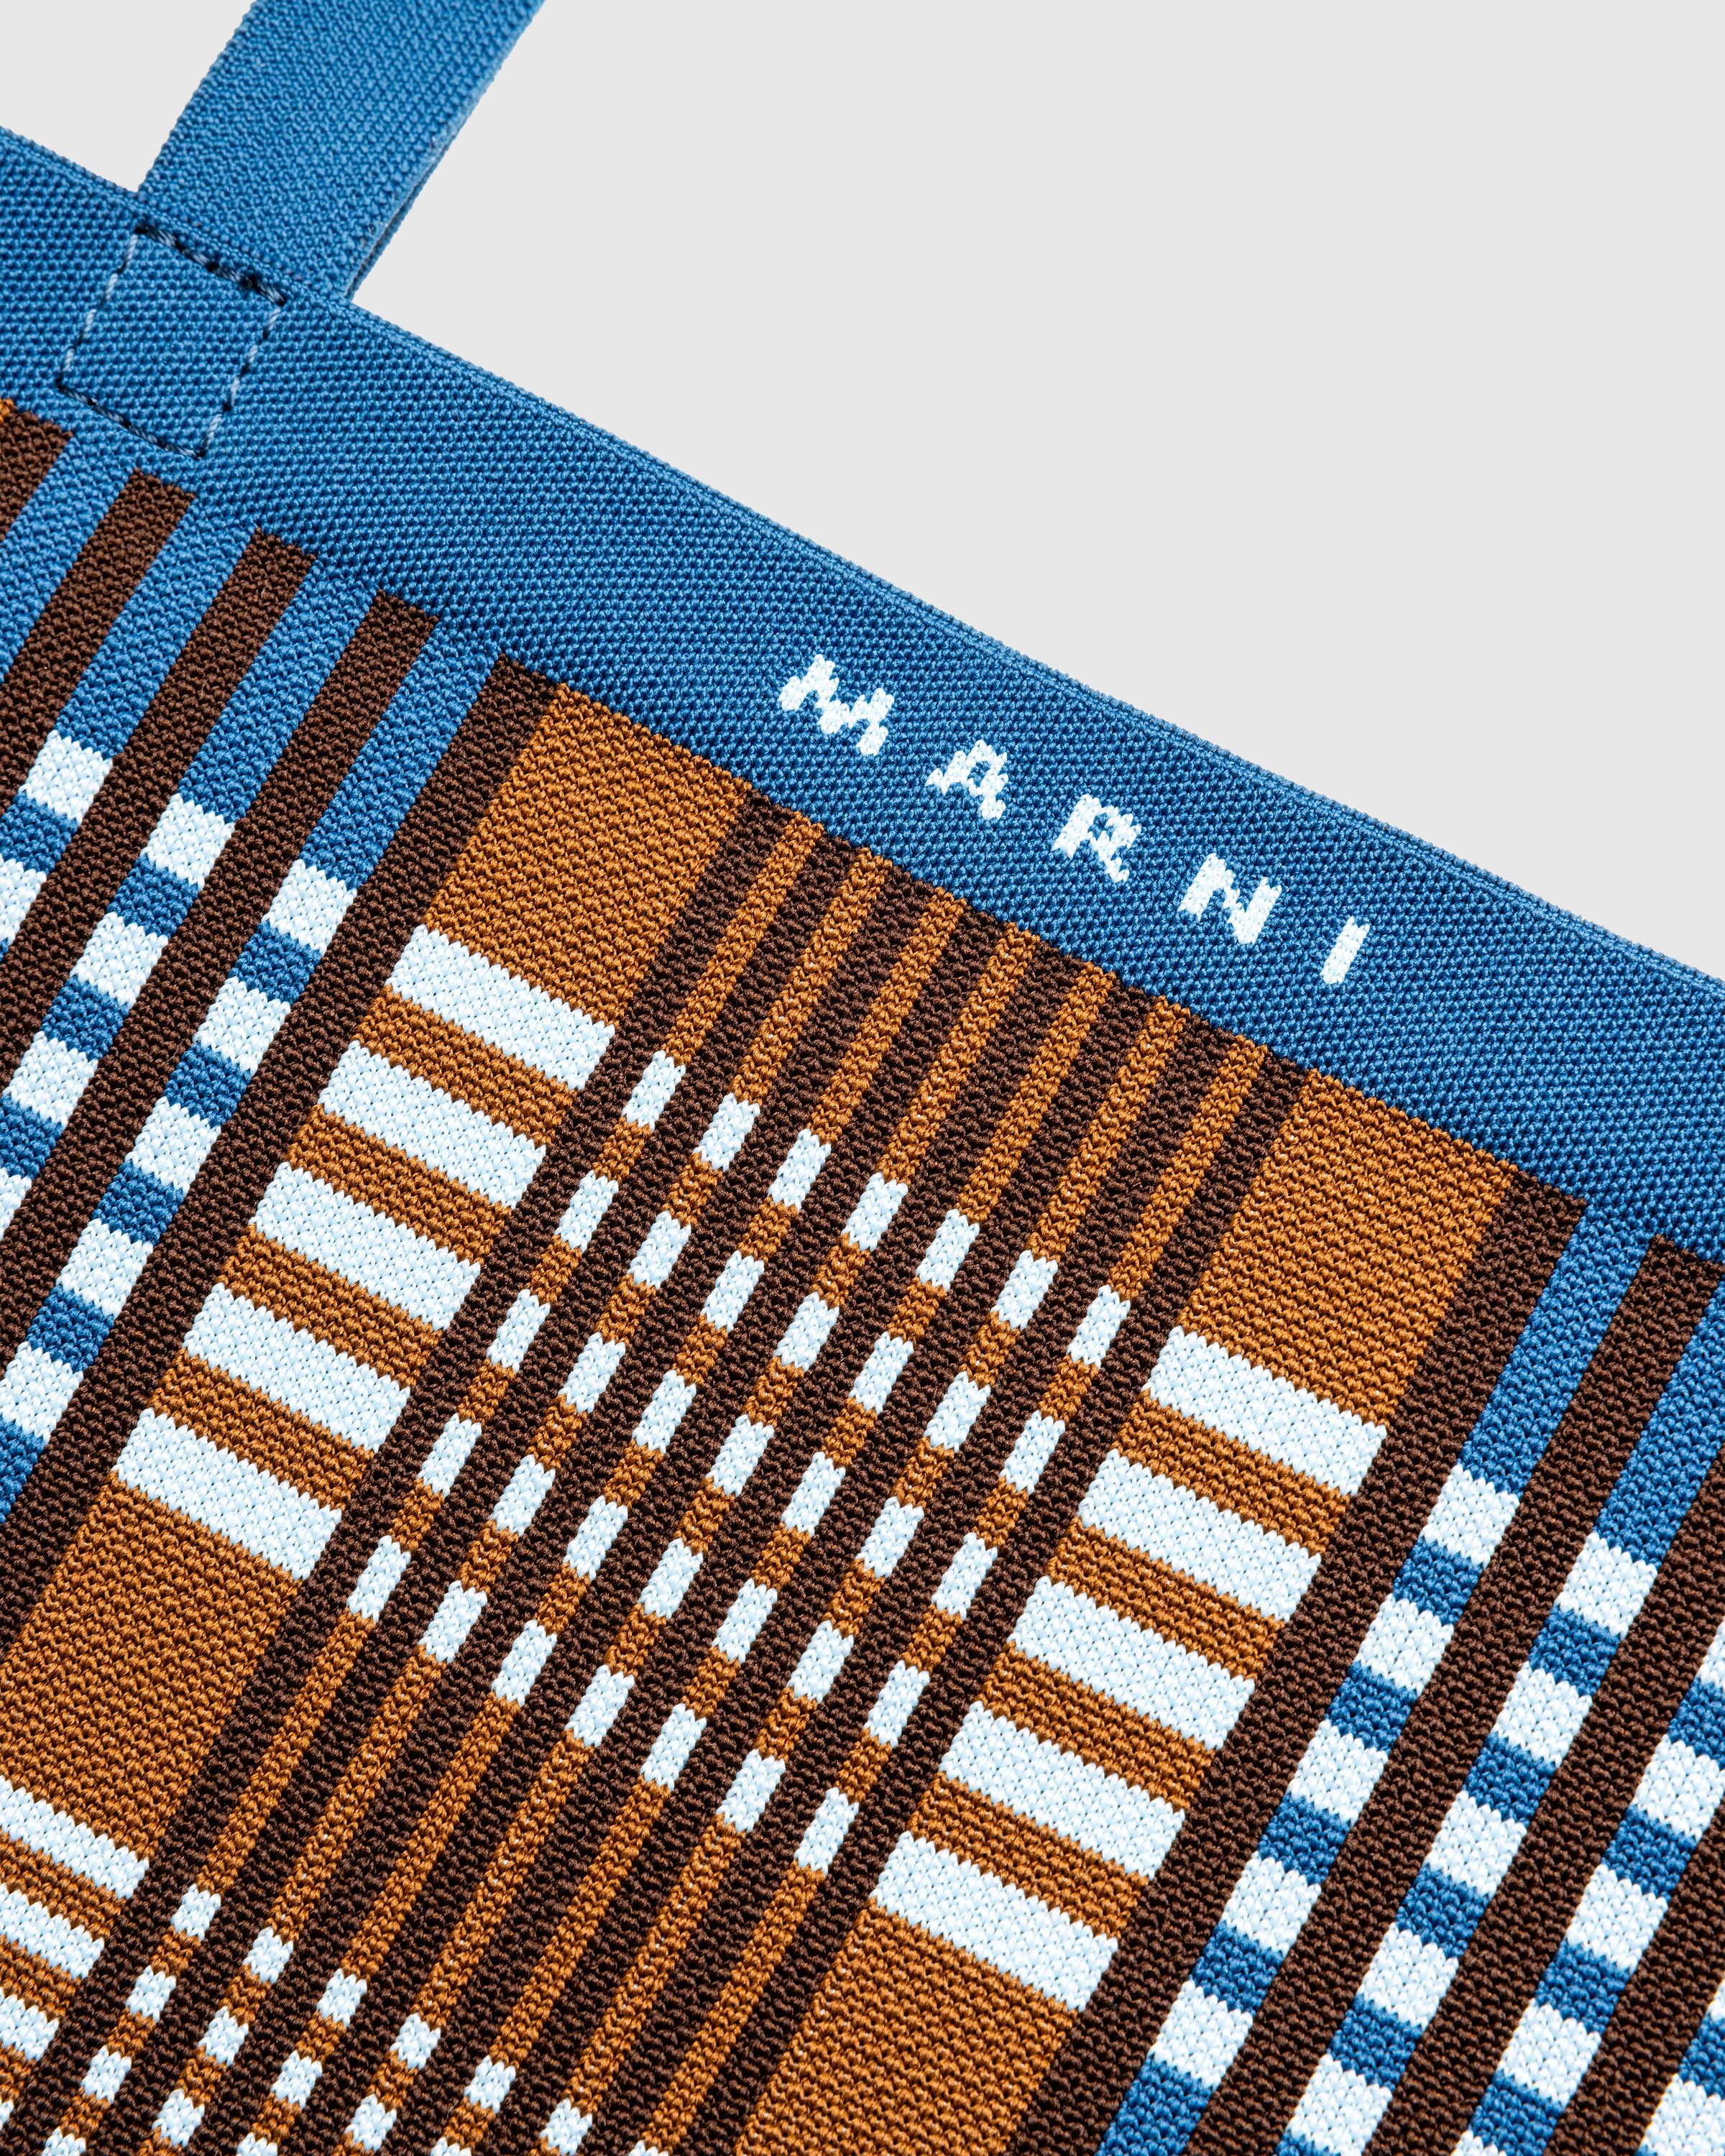 Marni - SHOPPING BAG LIGHT BLUE/RUST - Accessories - Multi - Image 4